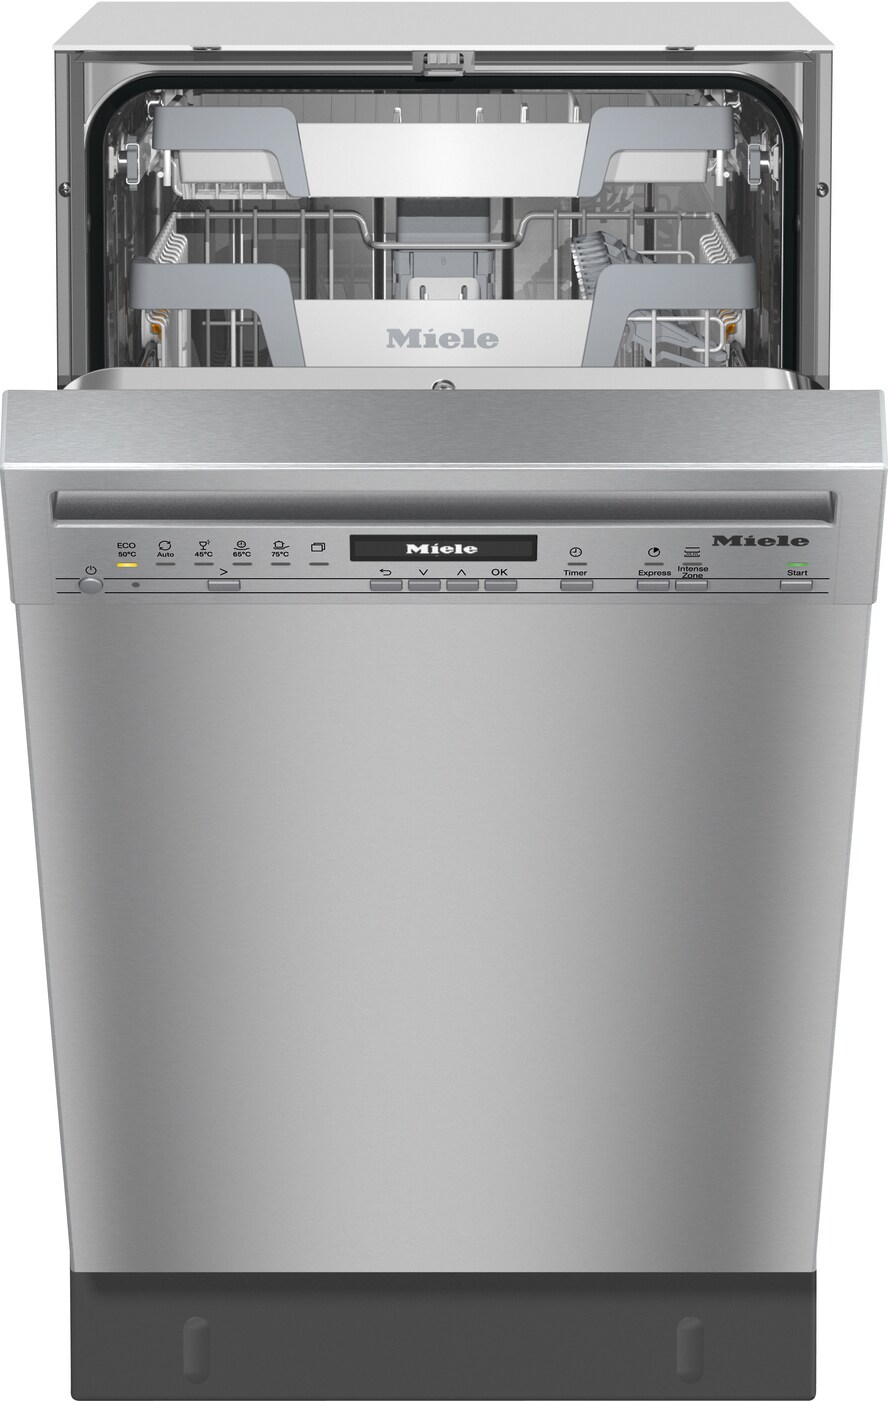 Miele opvaskemaskine G5640SCUCLST (stål) - Spar 20-40% på  Hvidevarerpriser.dk - Sammenlign priser